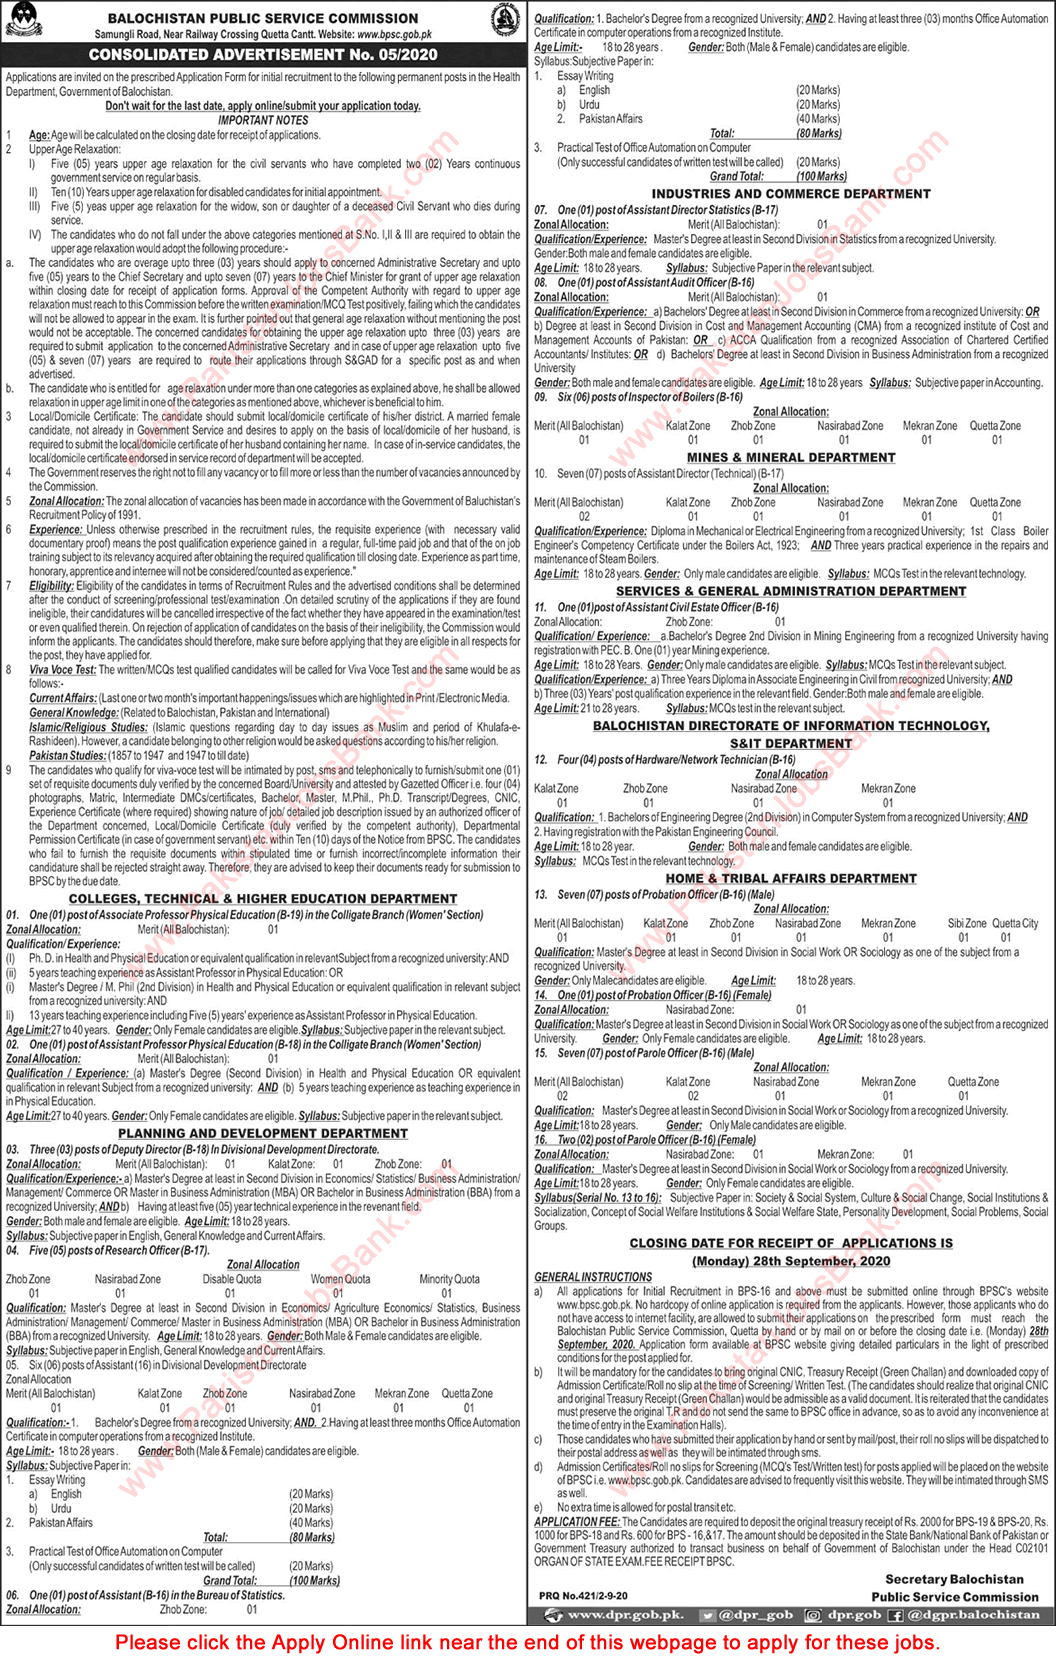 BPSC Jobs September 2020 Online Apply Advertisement No 05/2020 Balochistan Public Service Commission Latest